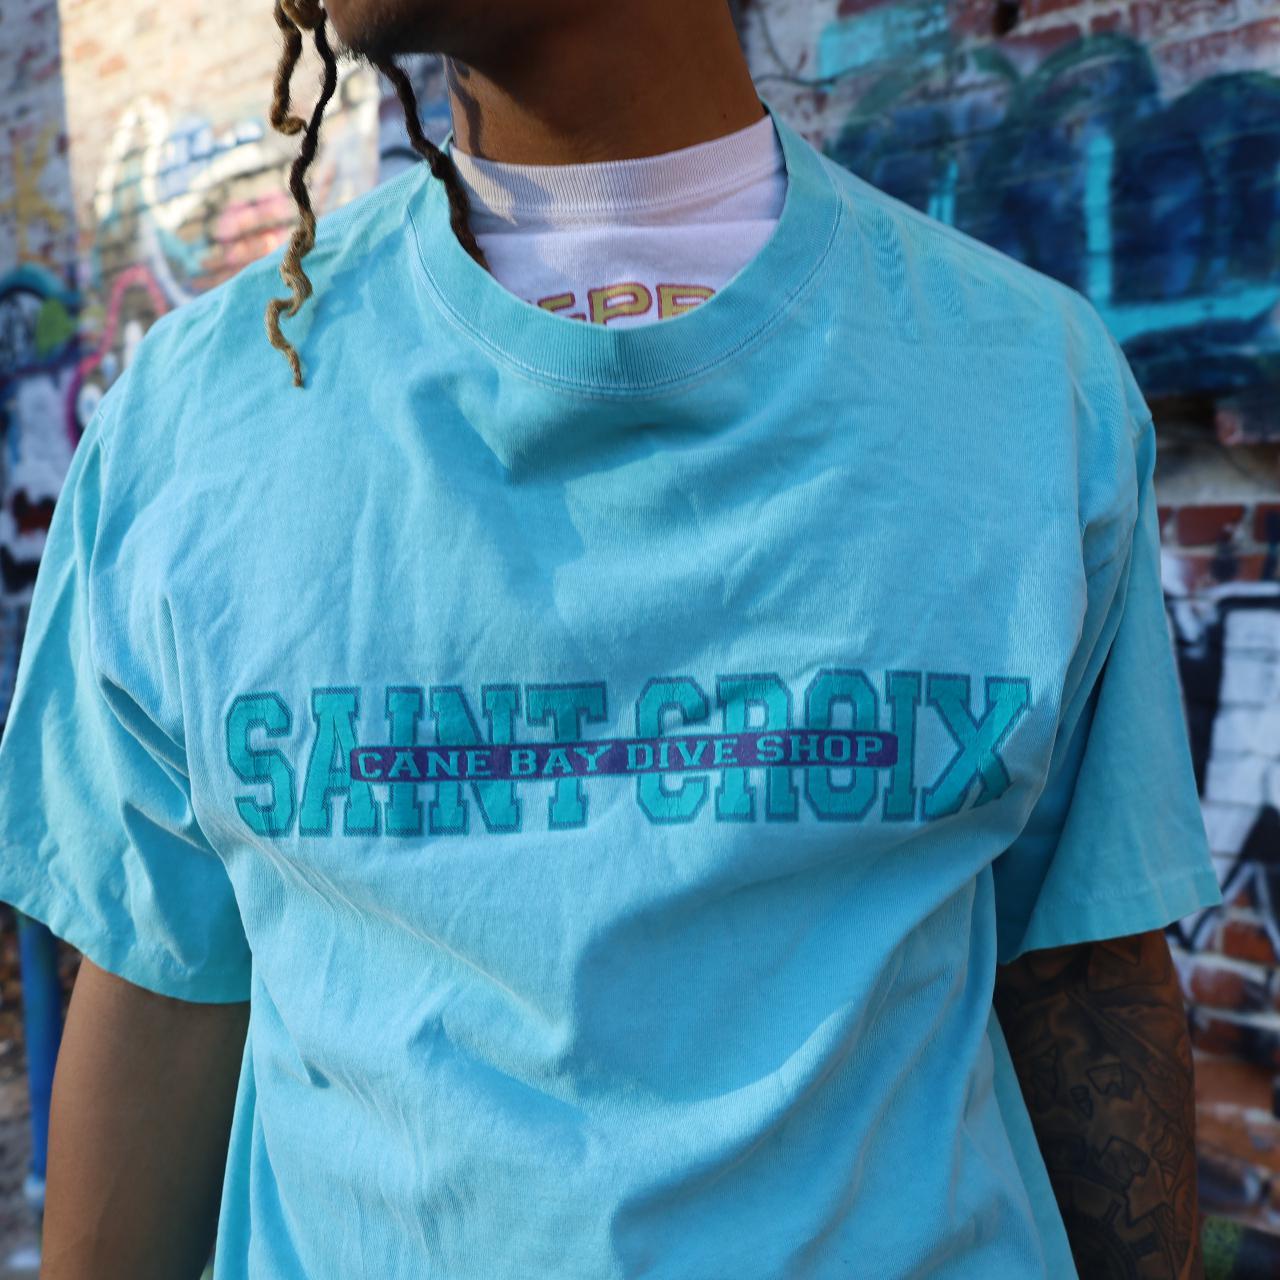 saint croix t shirt teal #st #croix #tshirt #teal - Depop